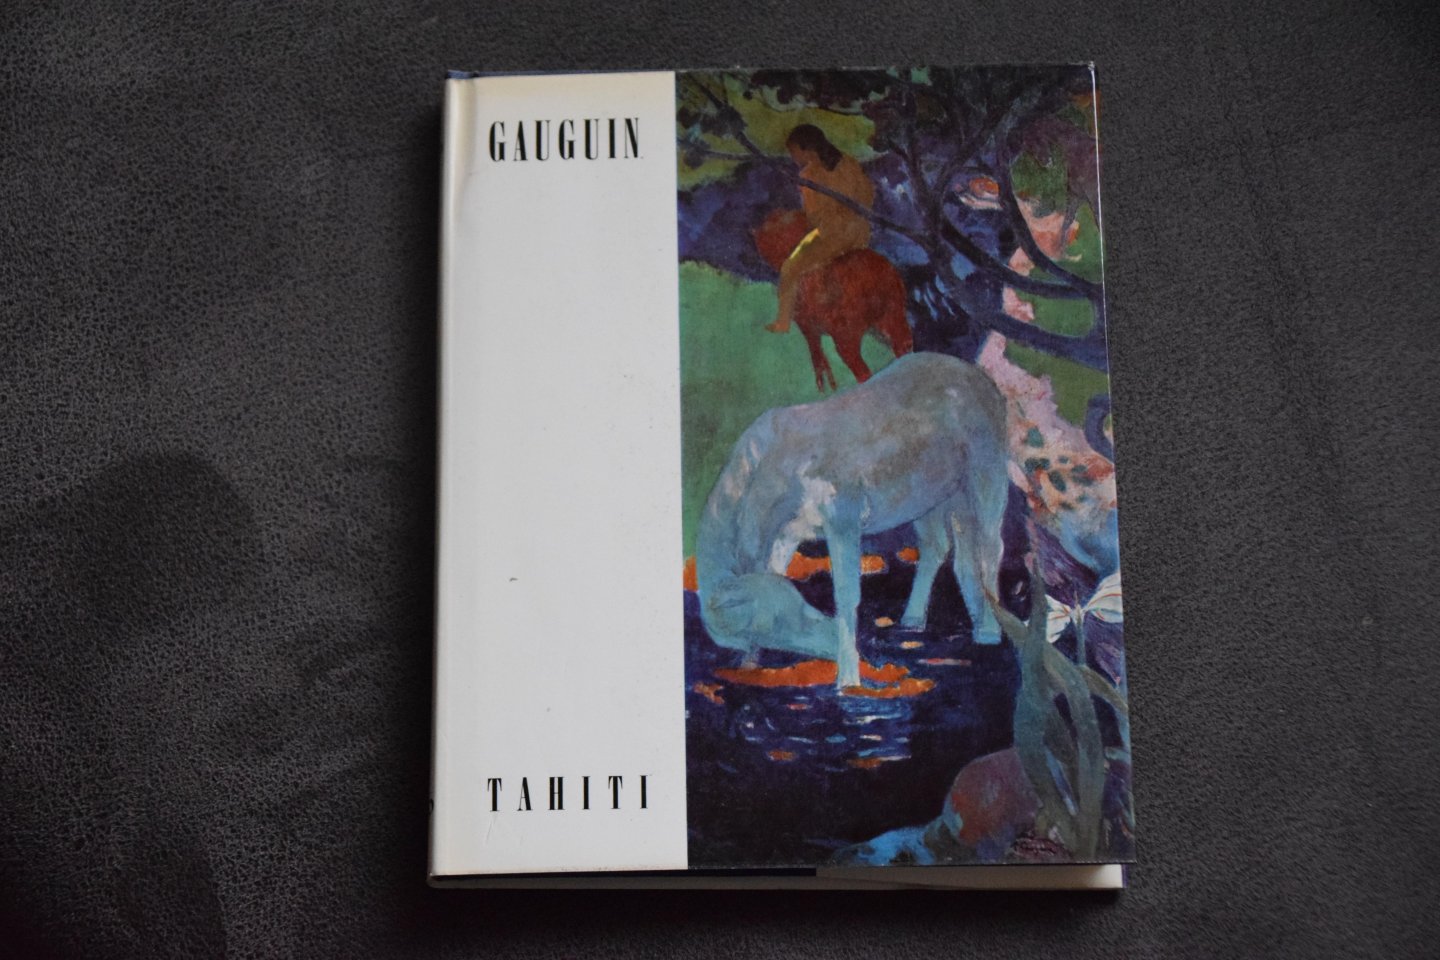 Pierre-Francis Schneeberger - Gauguin auf Tahiti